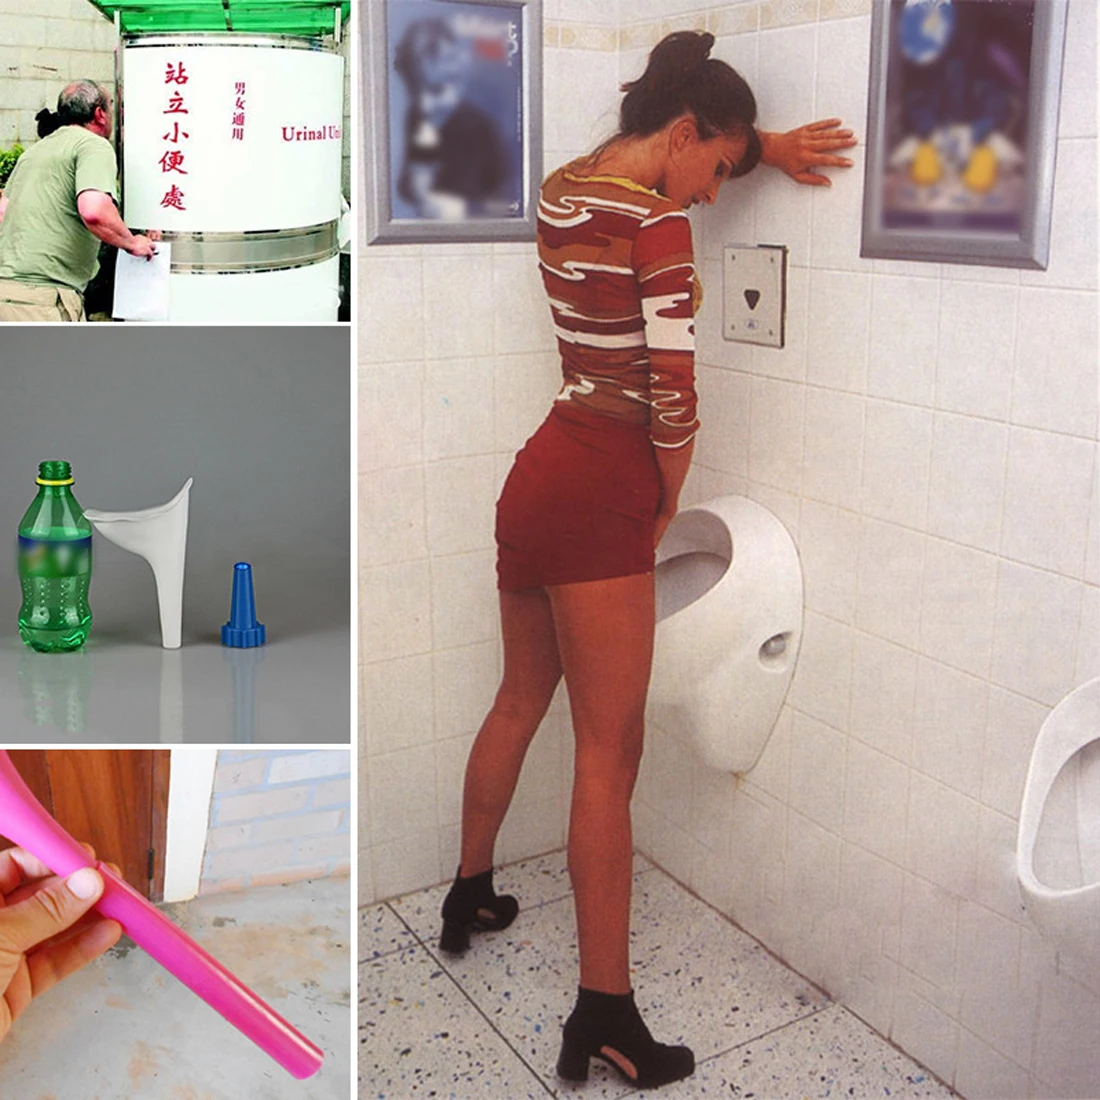 Shemale using urinal